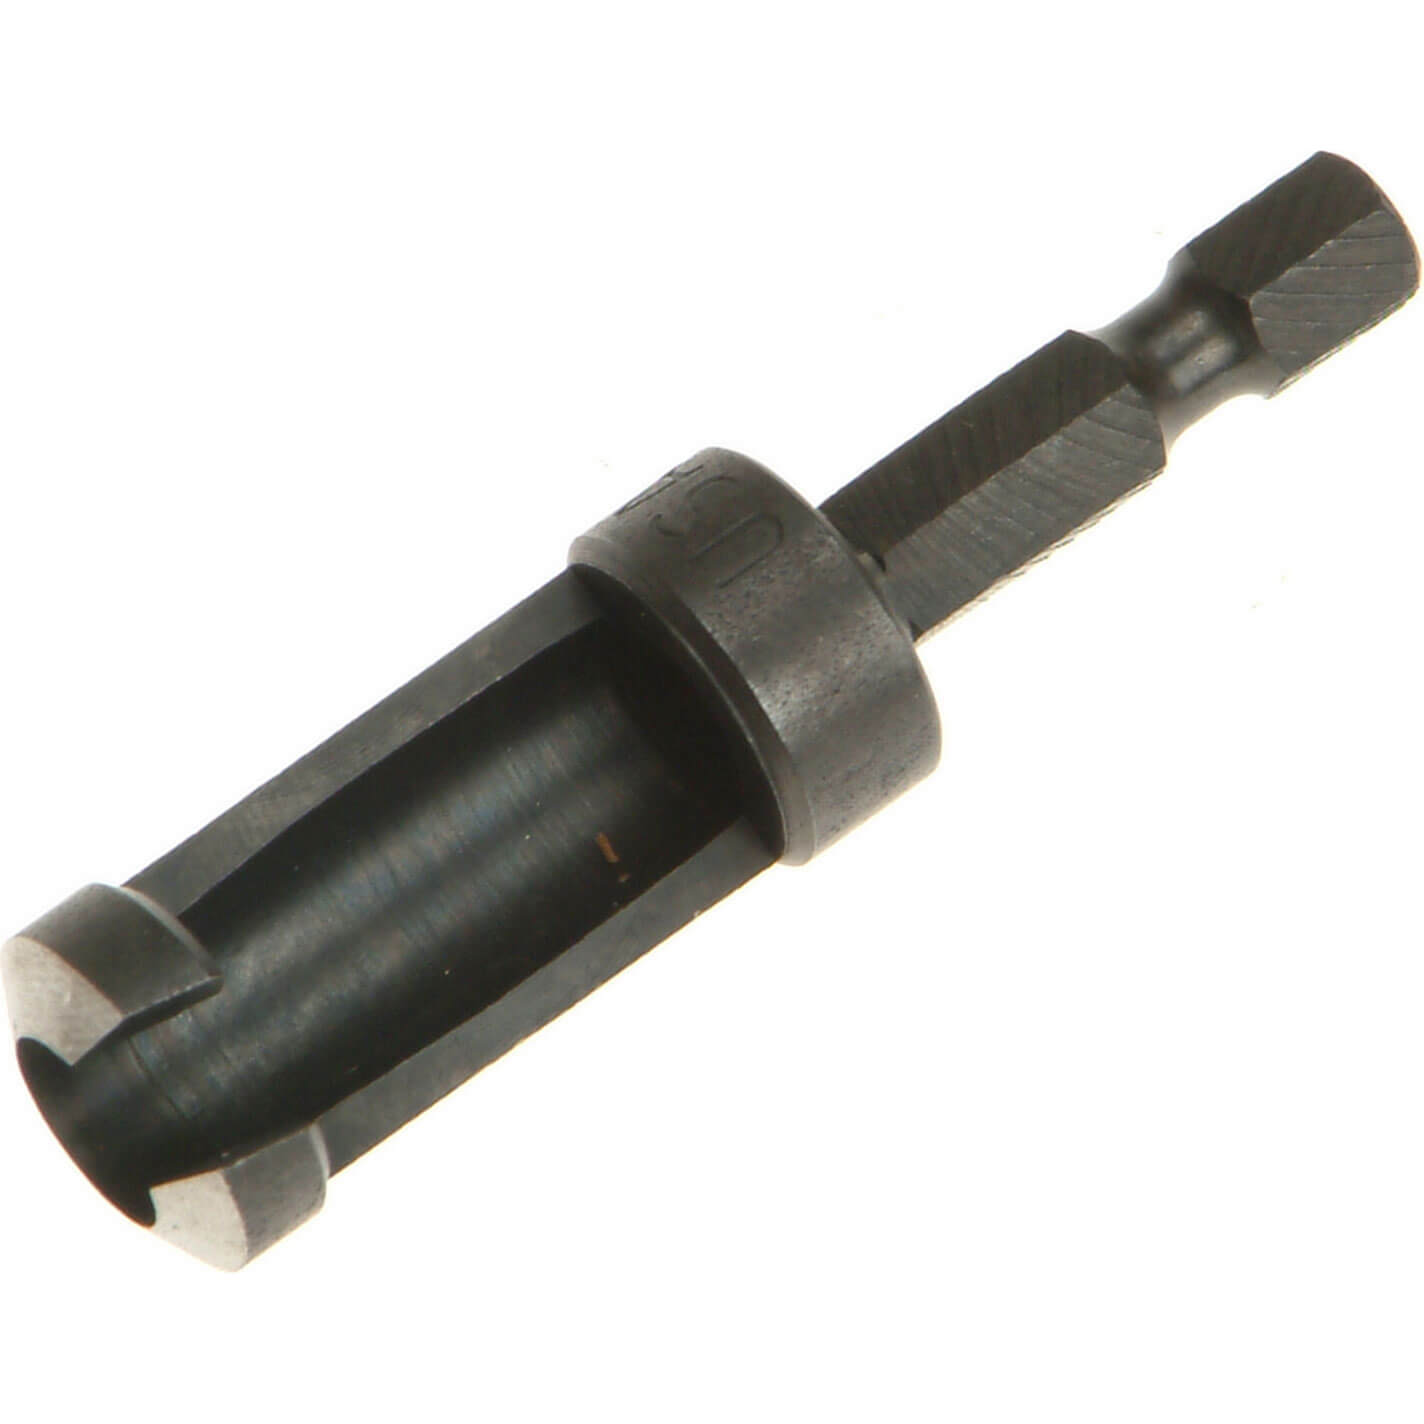 Photo of Disston Plug Cutter Size 8